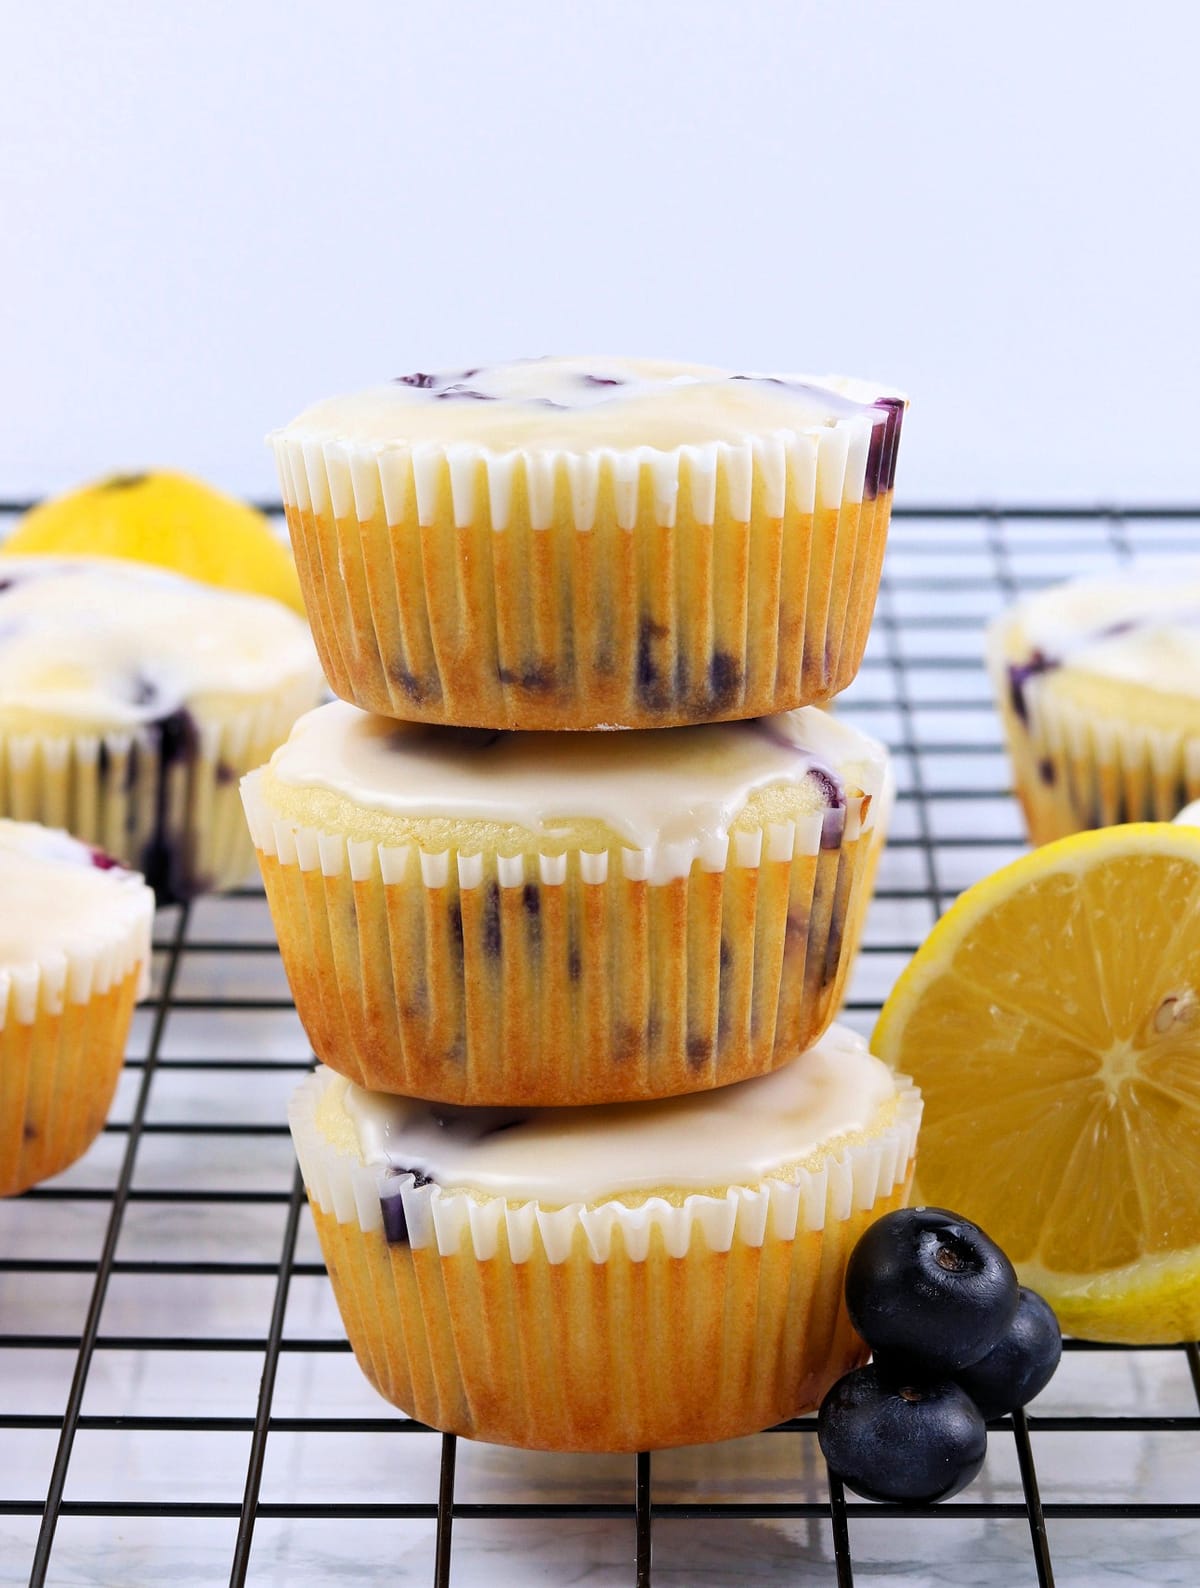 Lemon Blueberry Muffins with Lemon Glaze